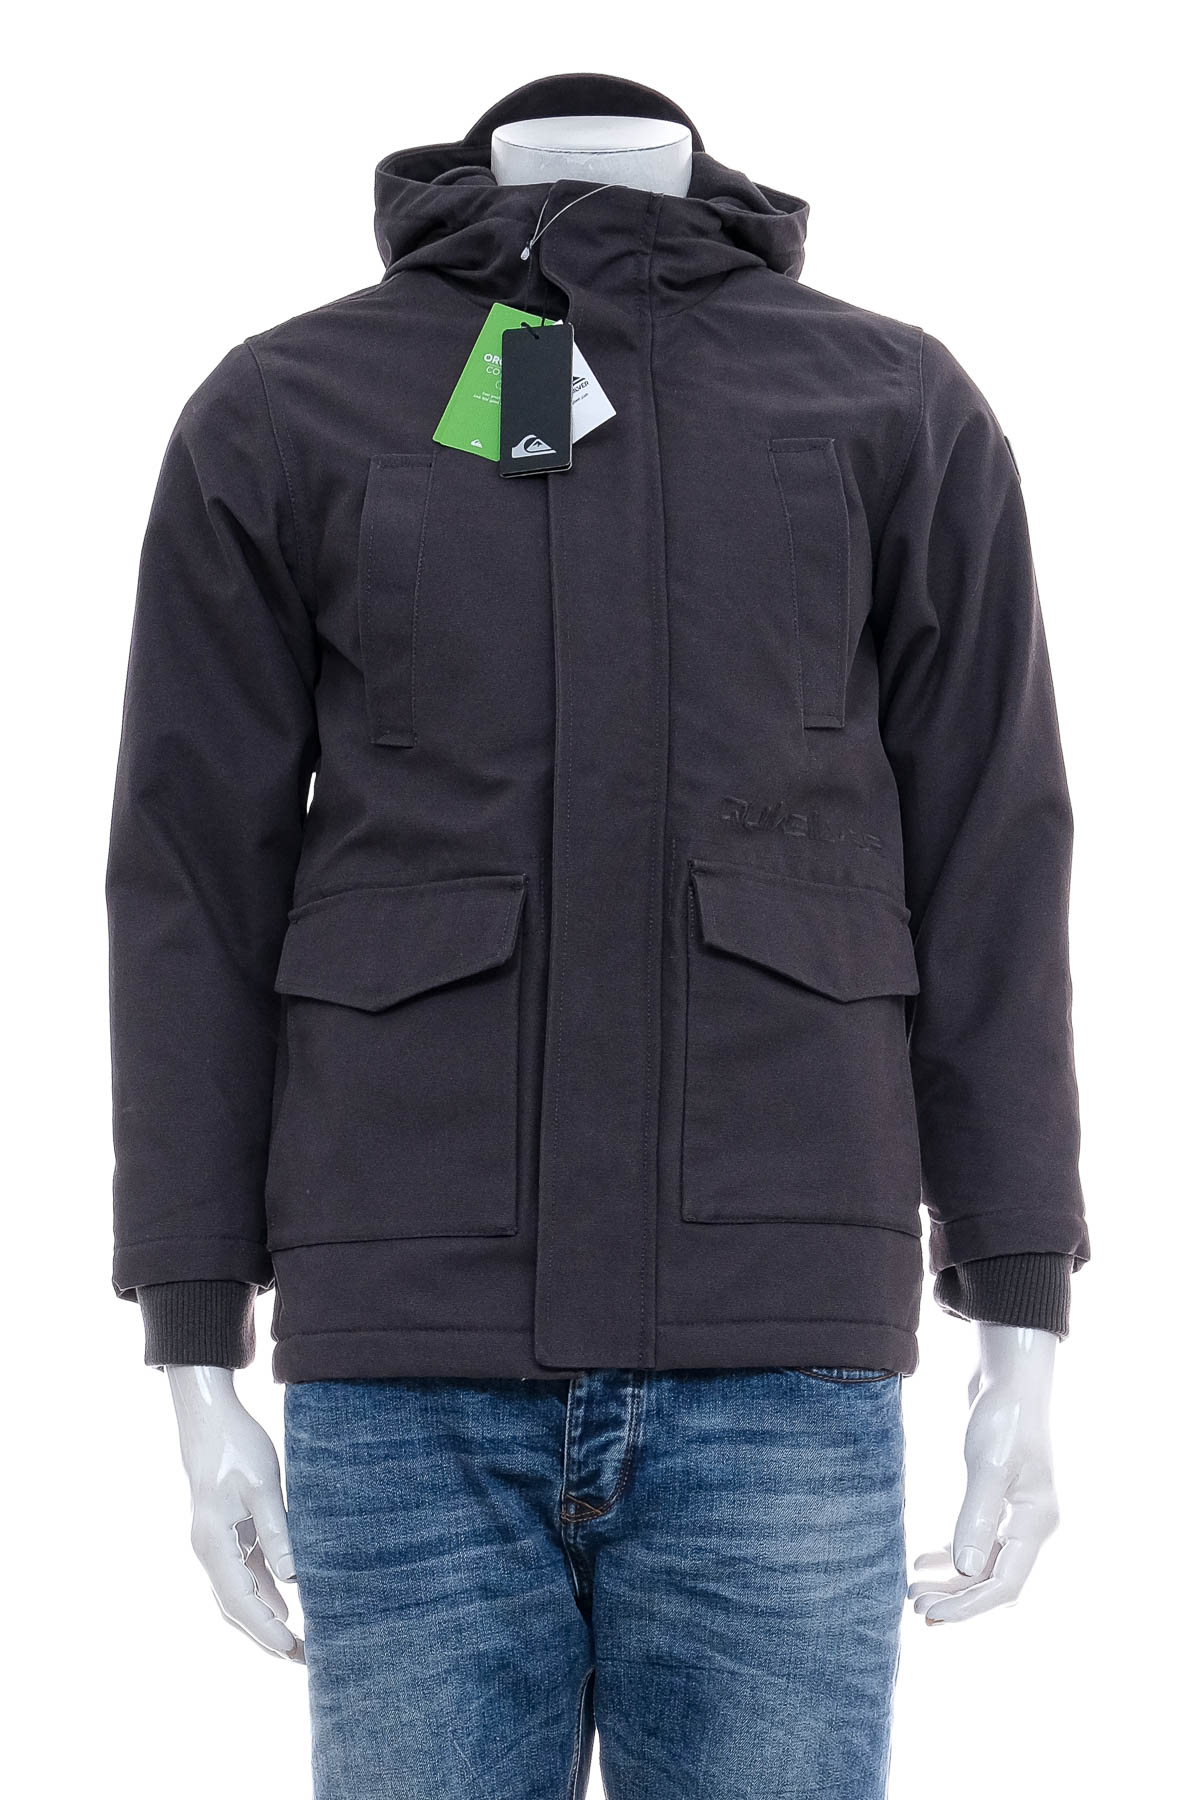 Boy's jacket - Quiksilver - 0